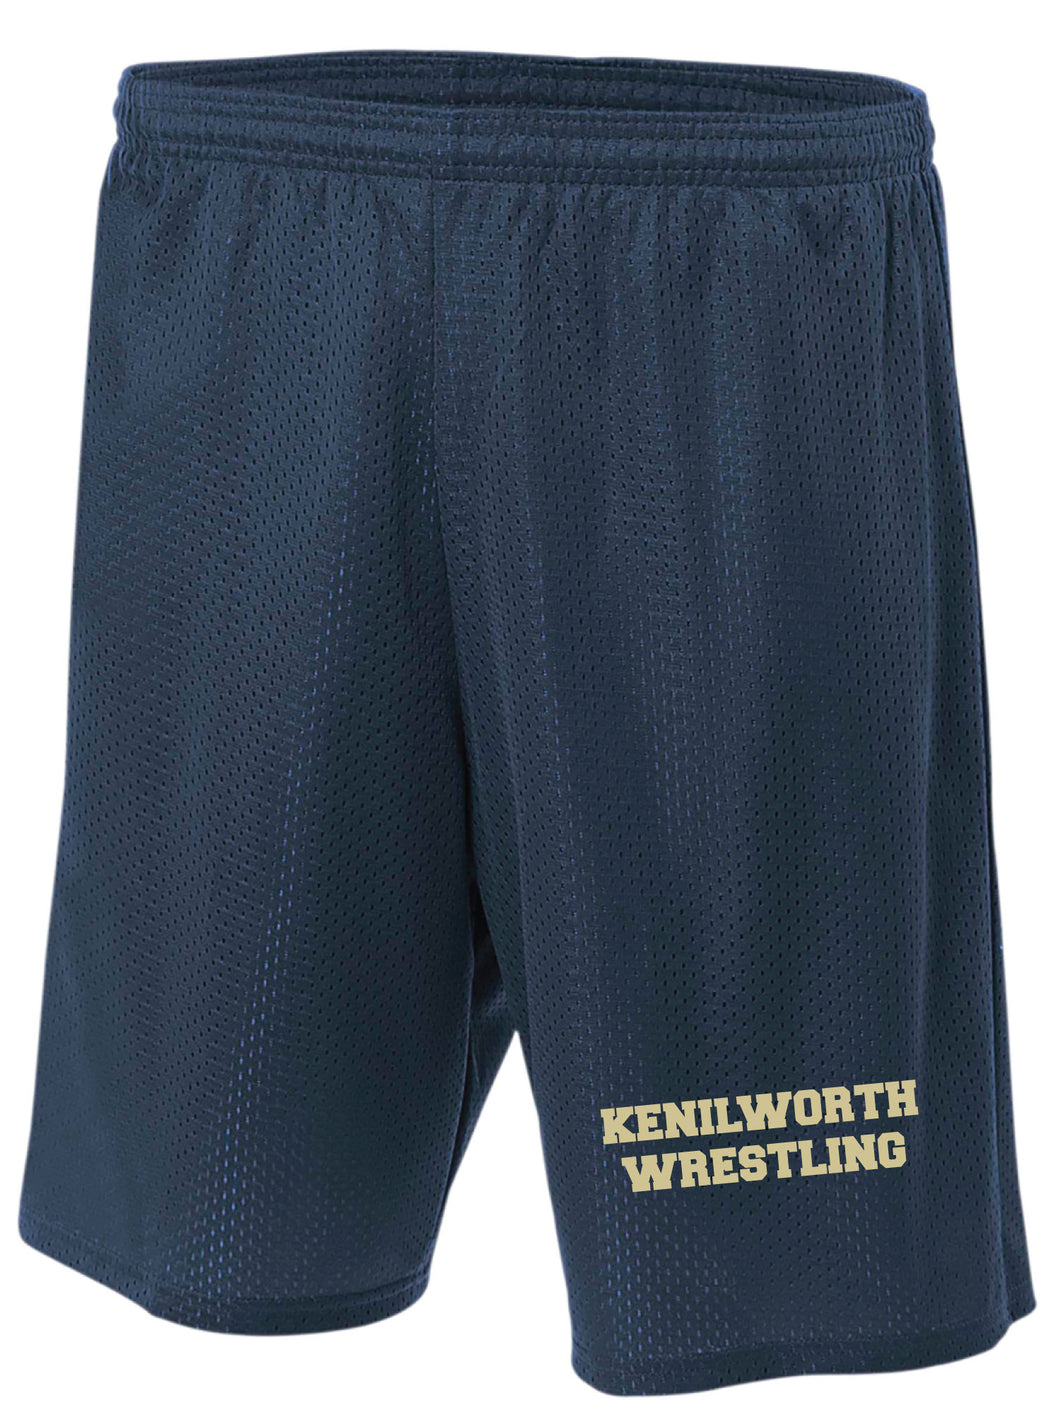 Kenilworth 2017 Tech Shorts - 5KounT